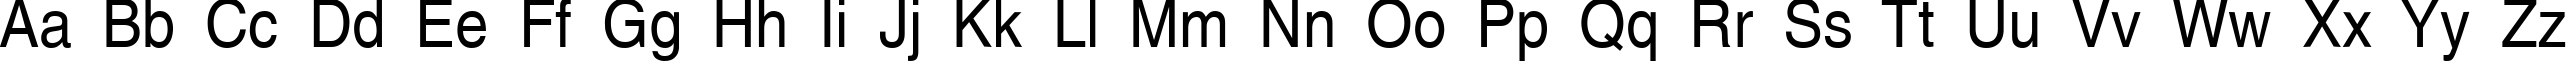 Пример написания английского алфавита шрифтом AGHlvCyrillic Normal90n